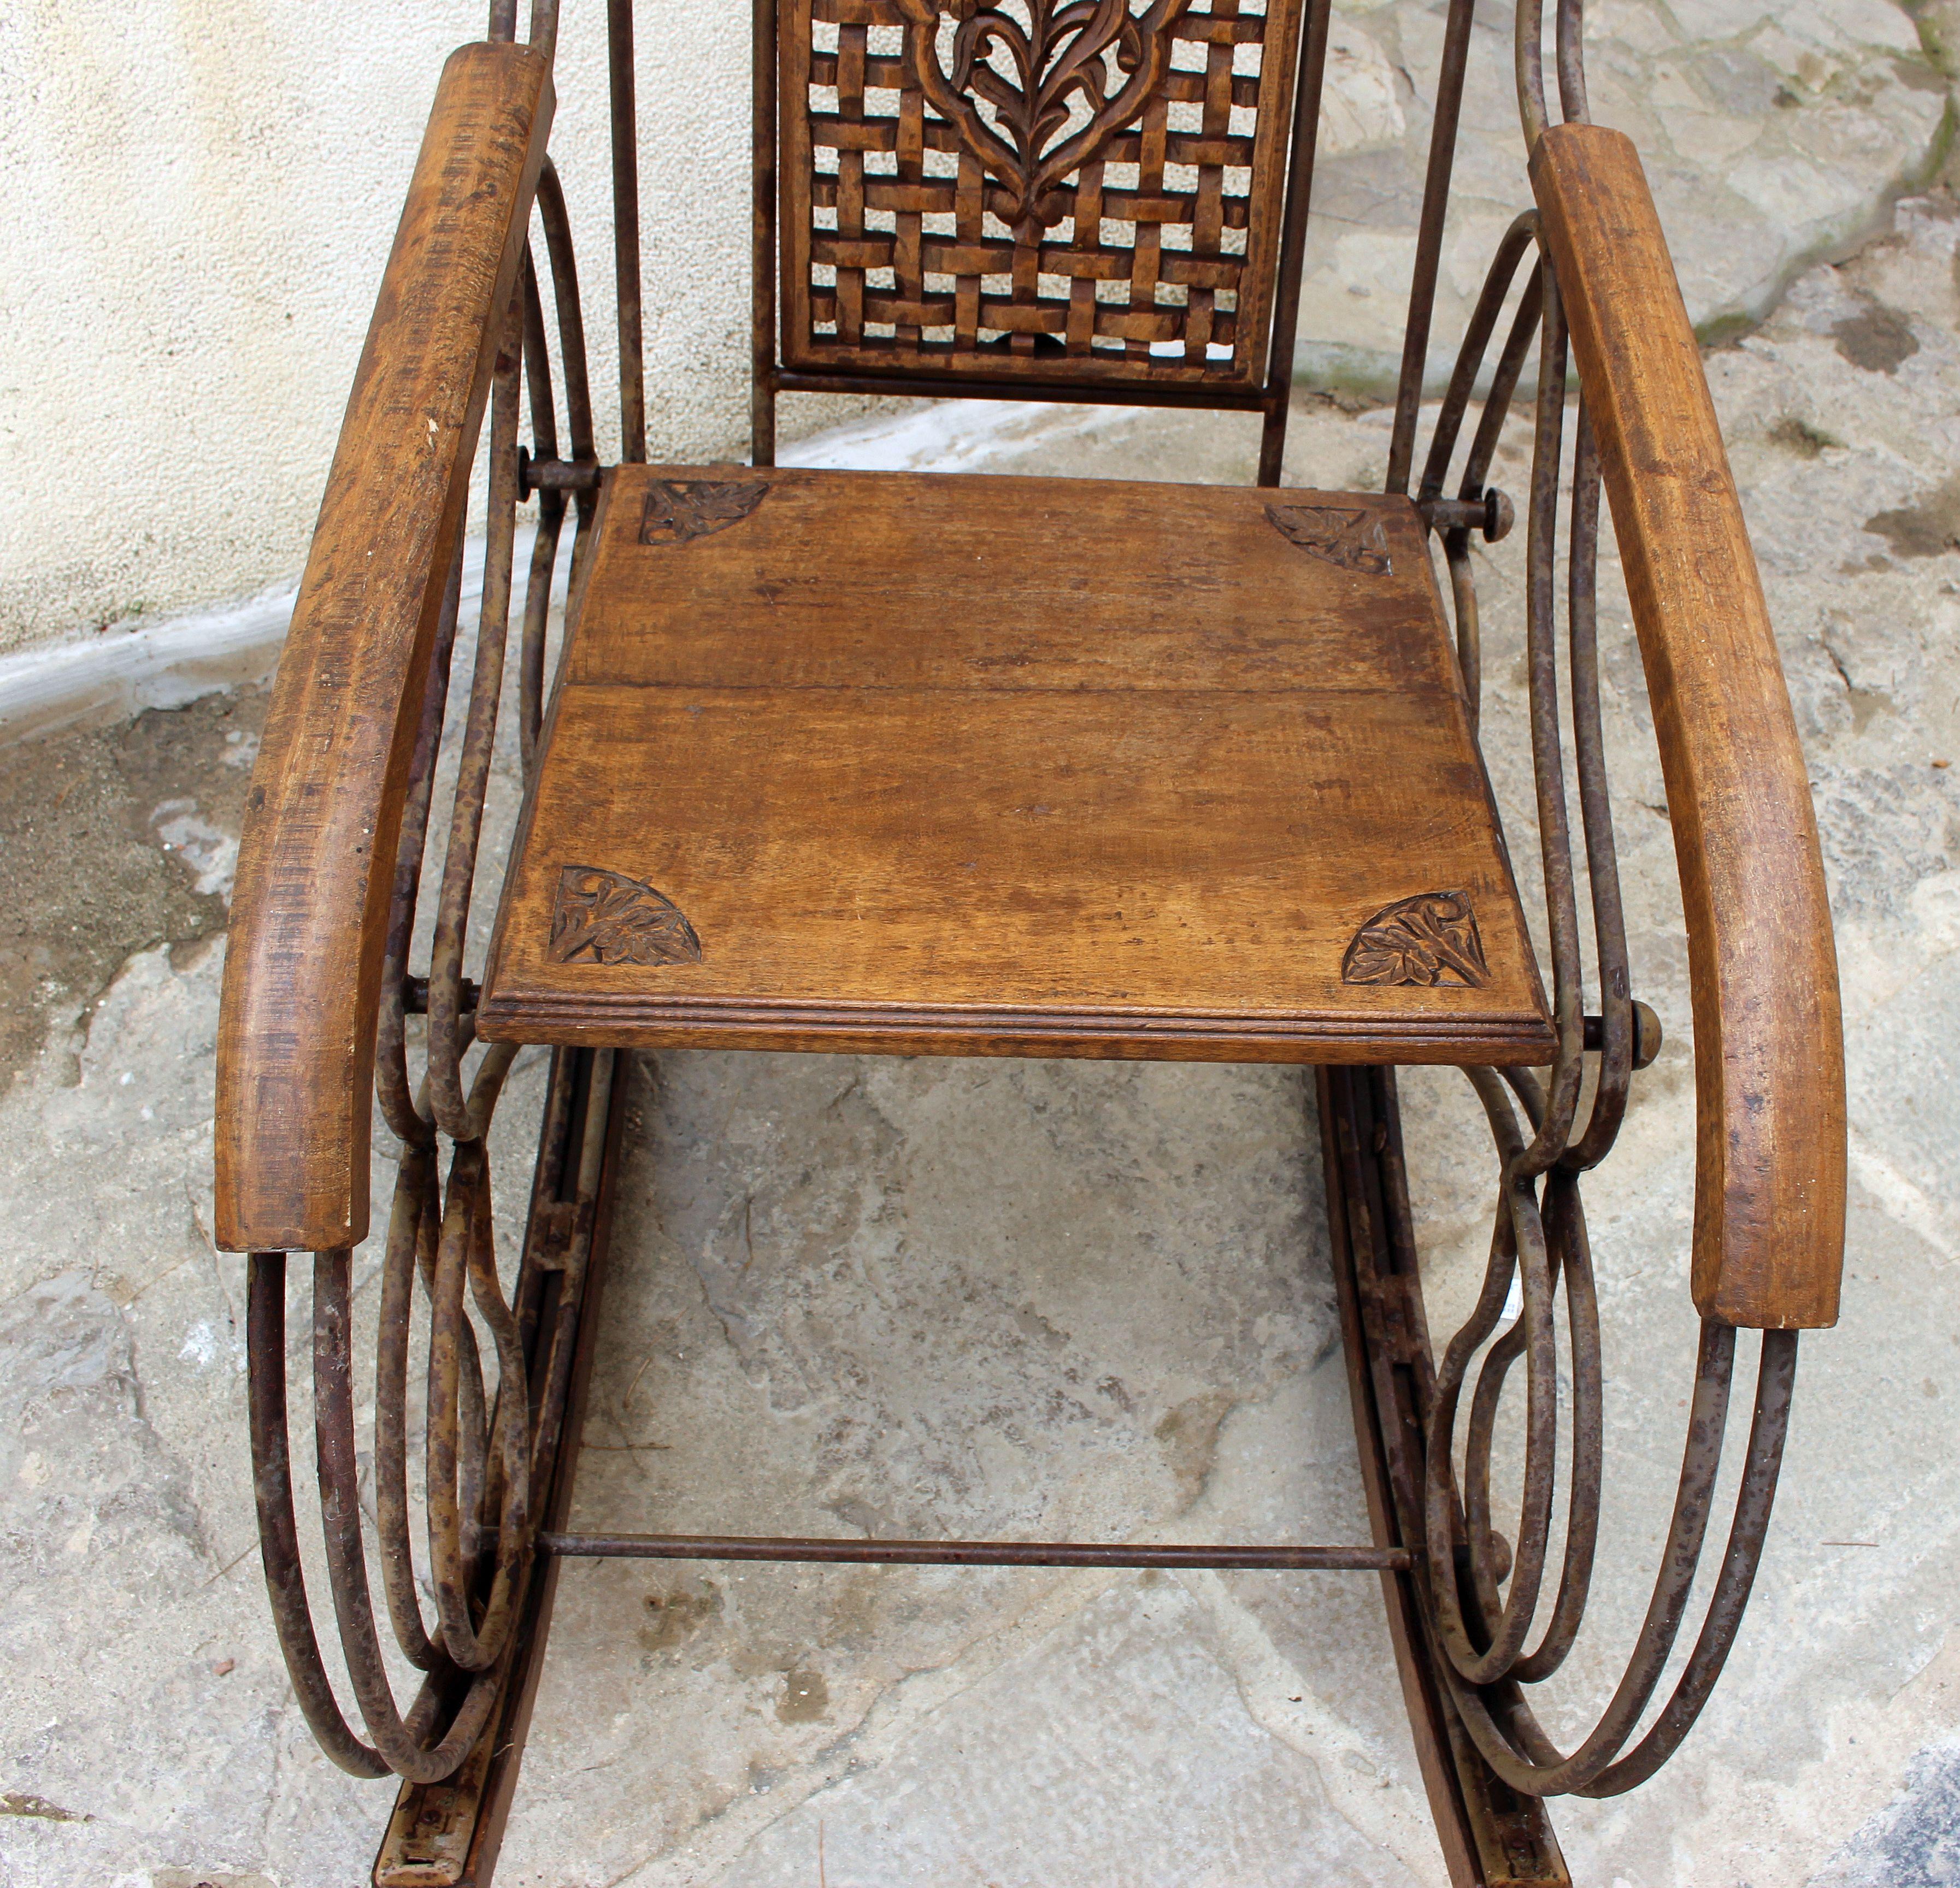 antique metal rocking chair